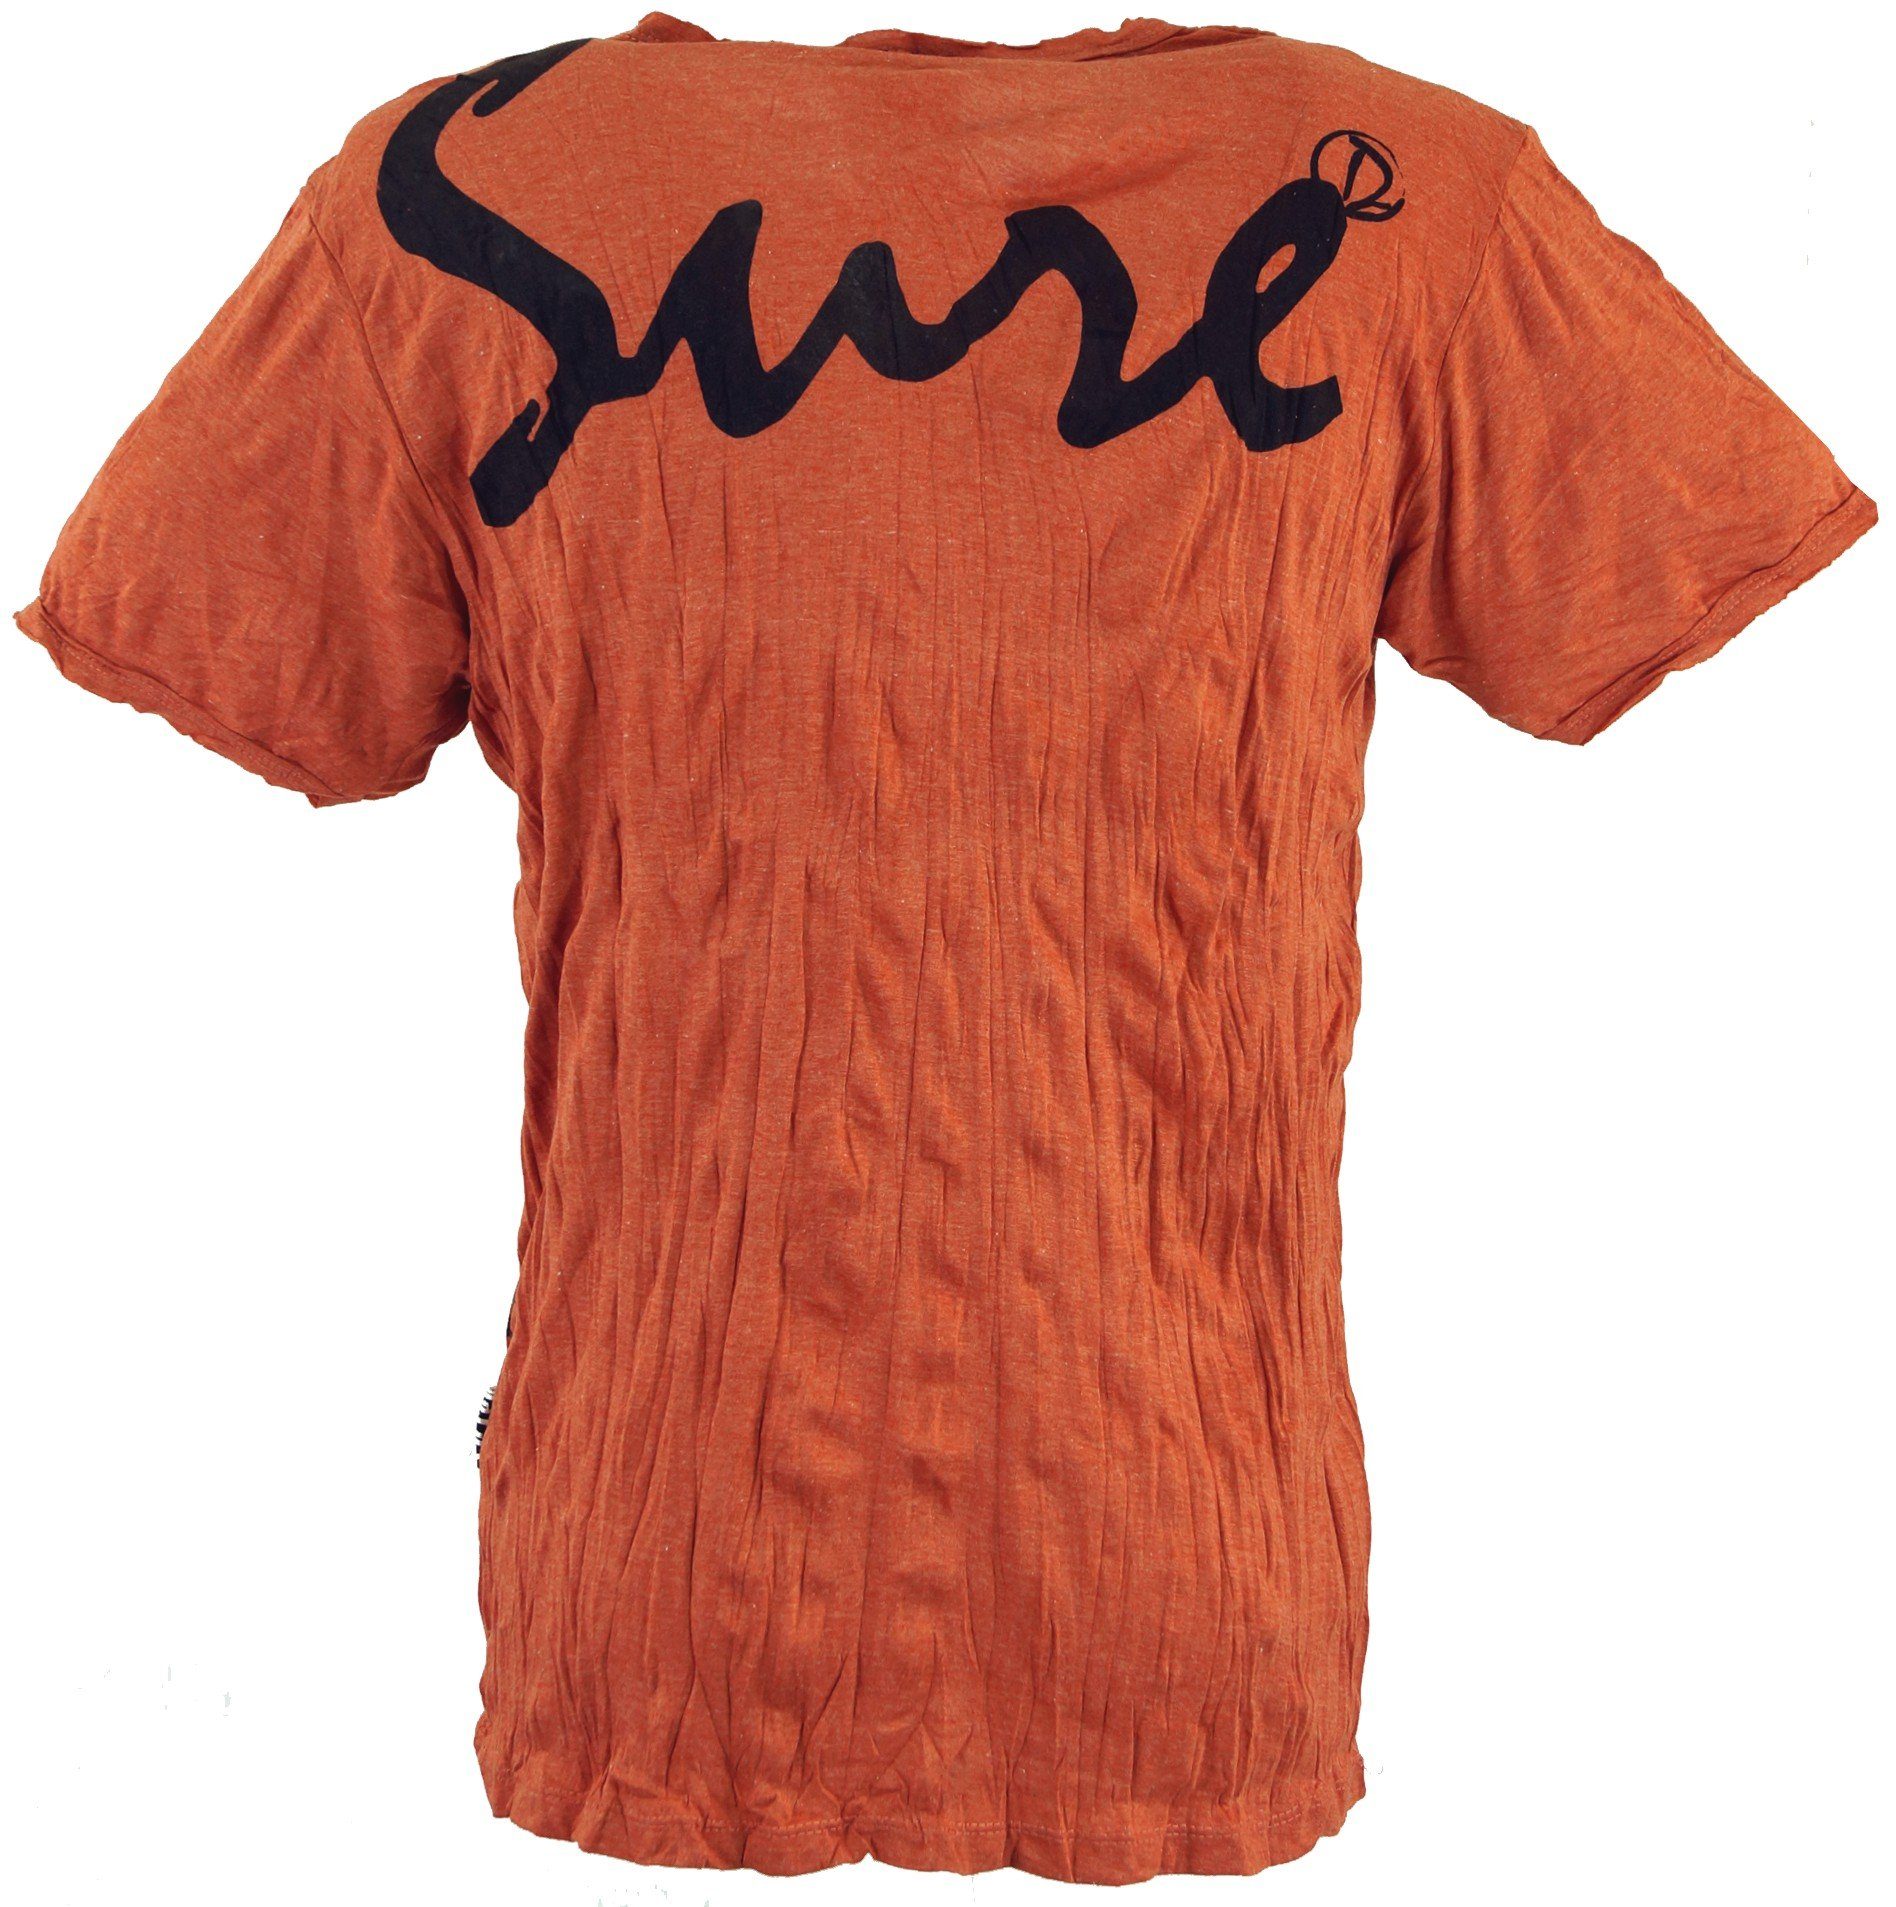 Sure Buddha Festival, - Goa rostorange T-Shirt alternative Guru-Shop Happy Style, Bekleidung T-Shirt